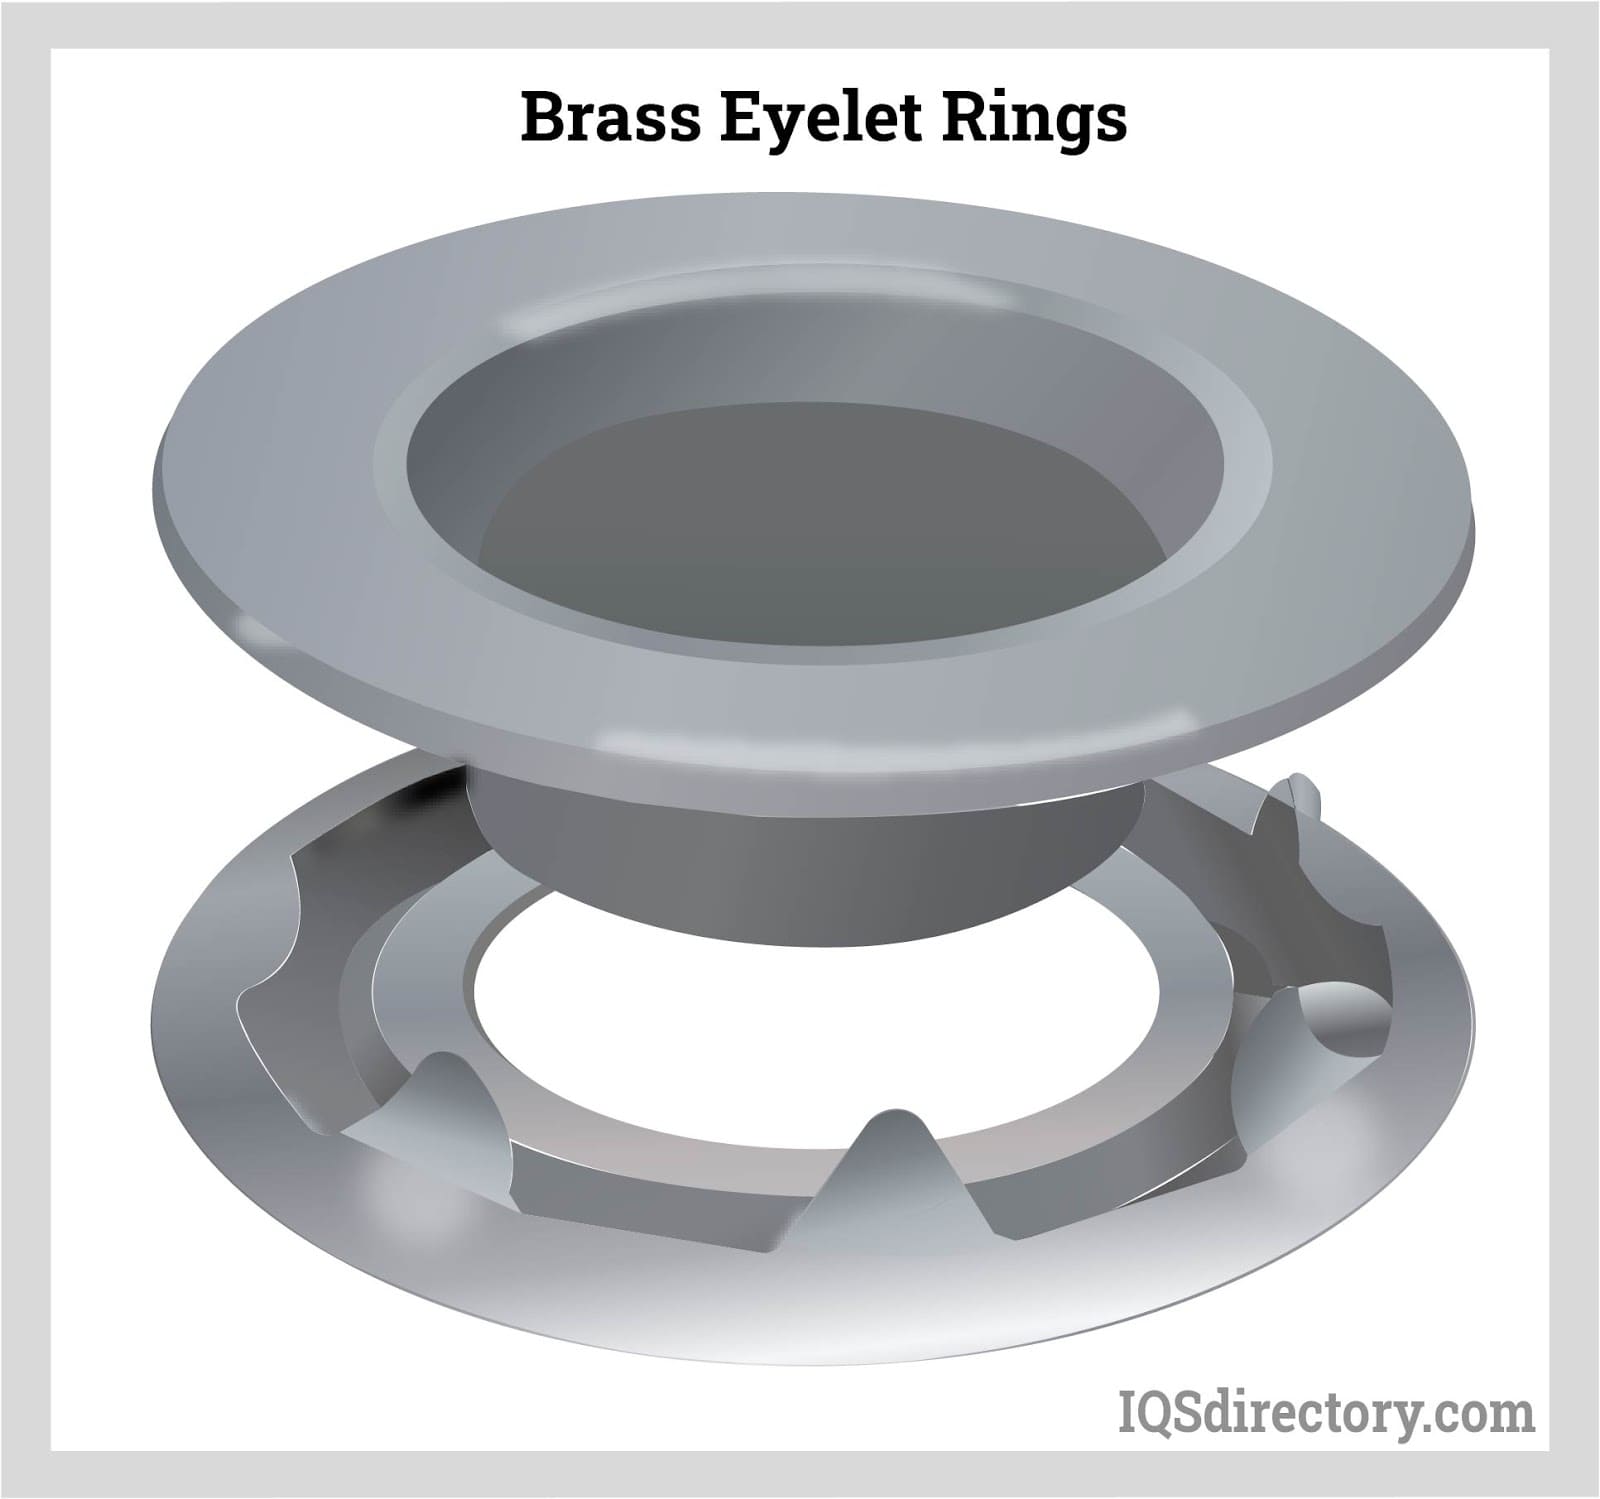 Brass Eyelet Rings